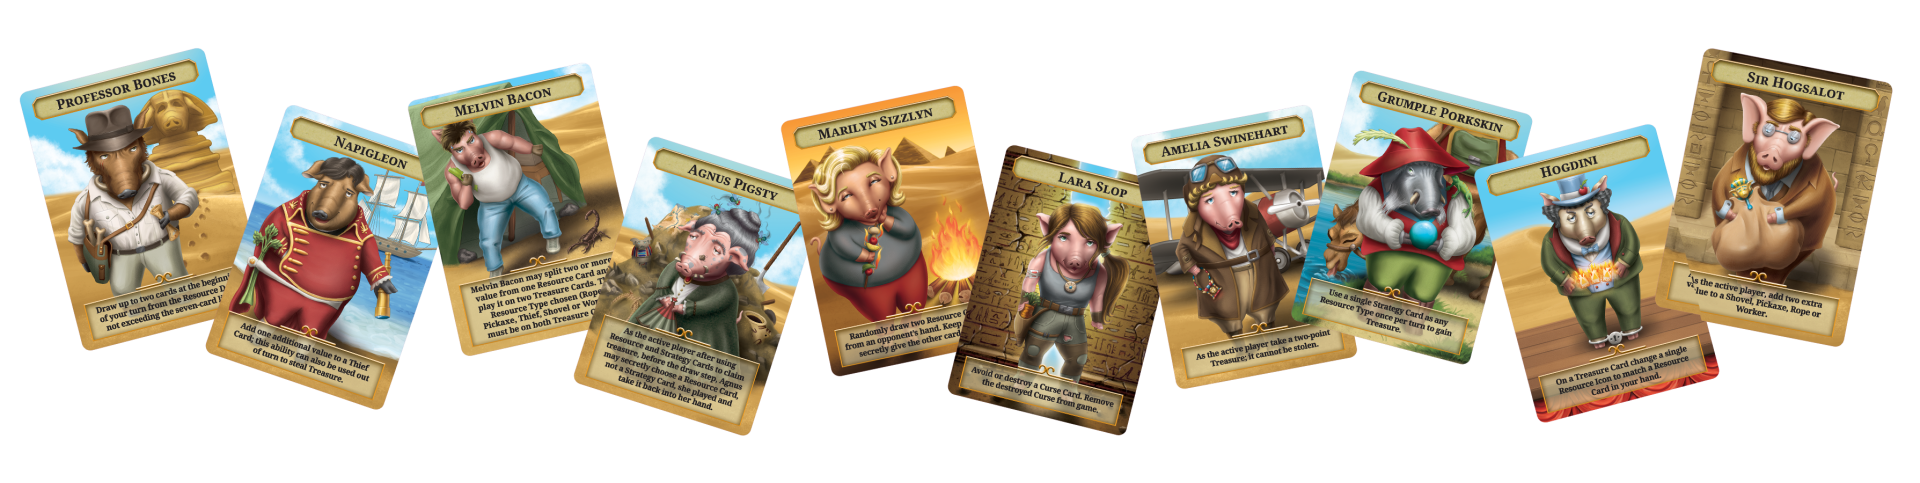 Treasure Hogs game cards